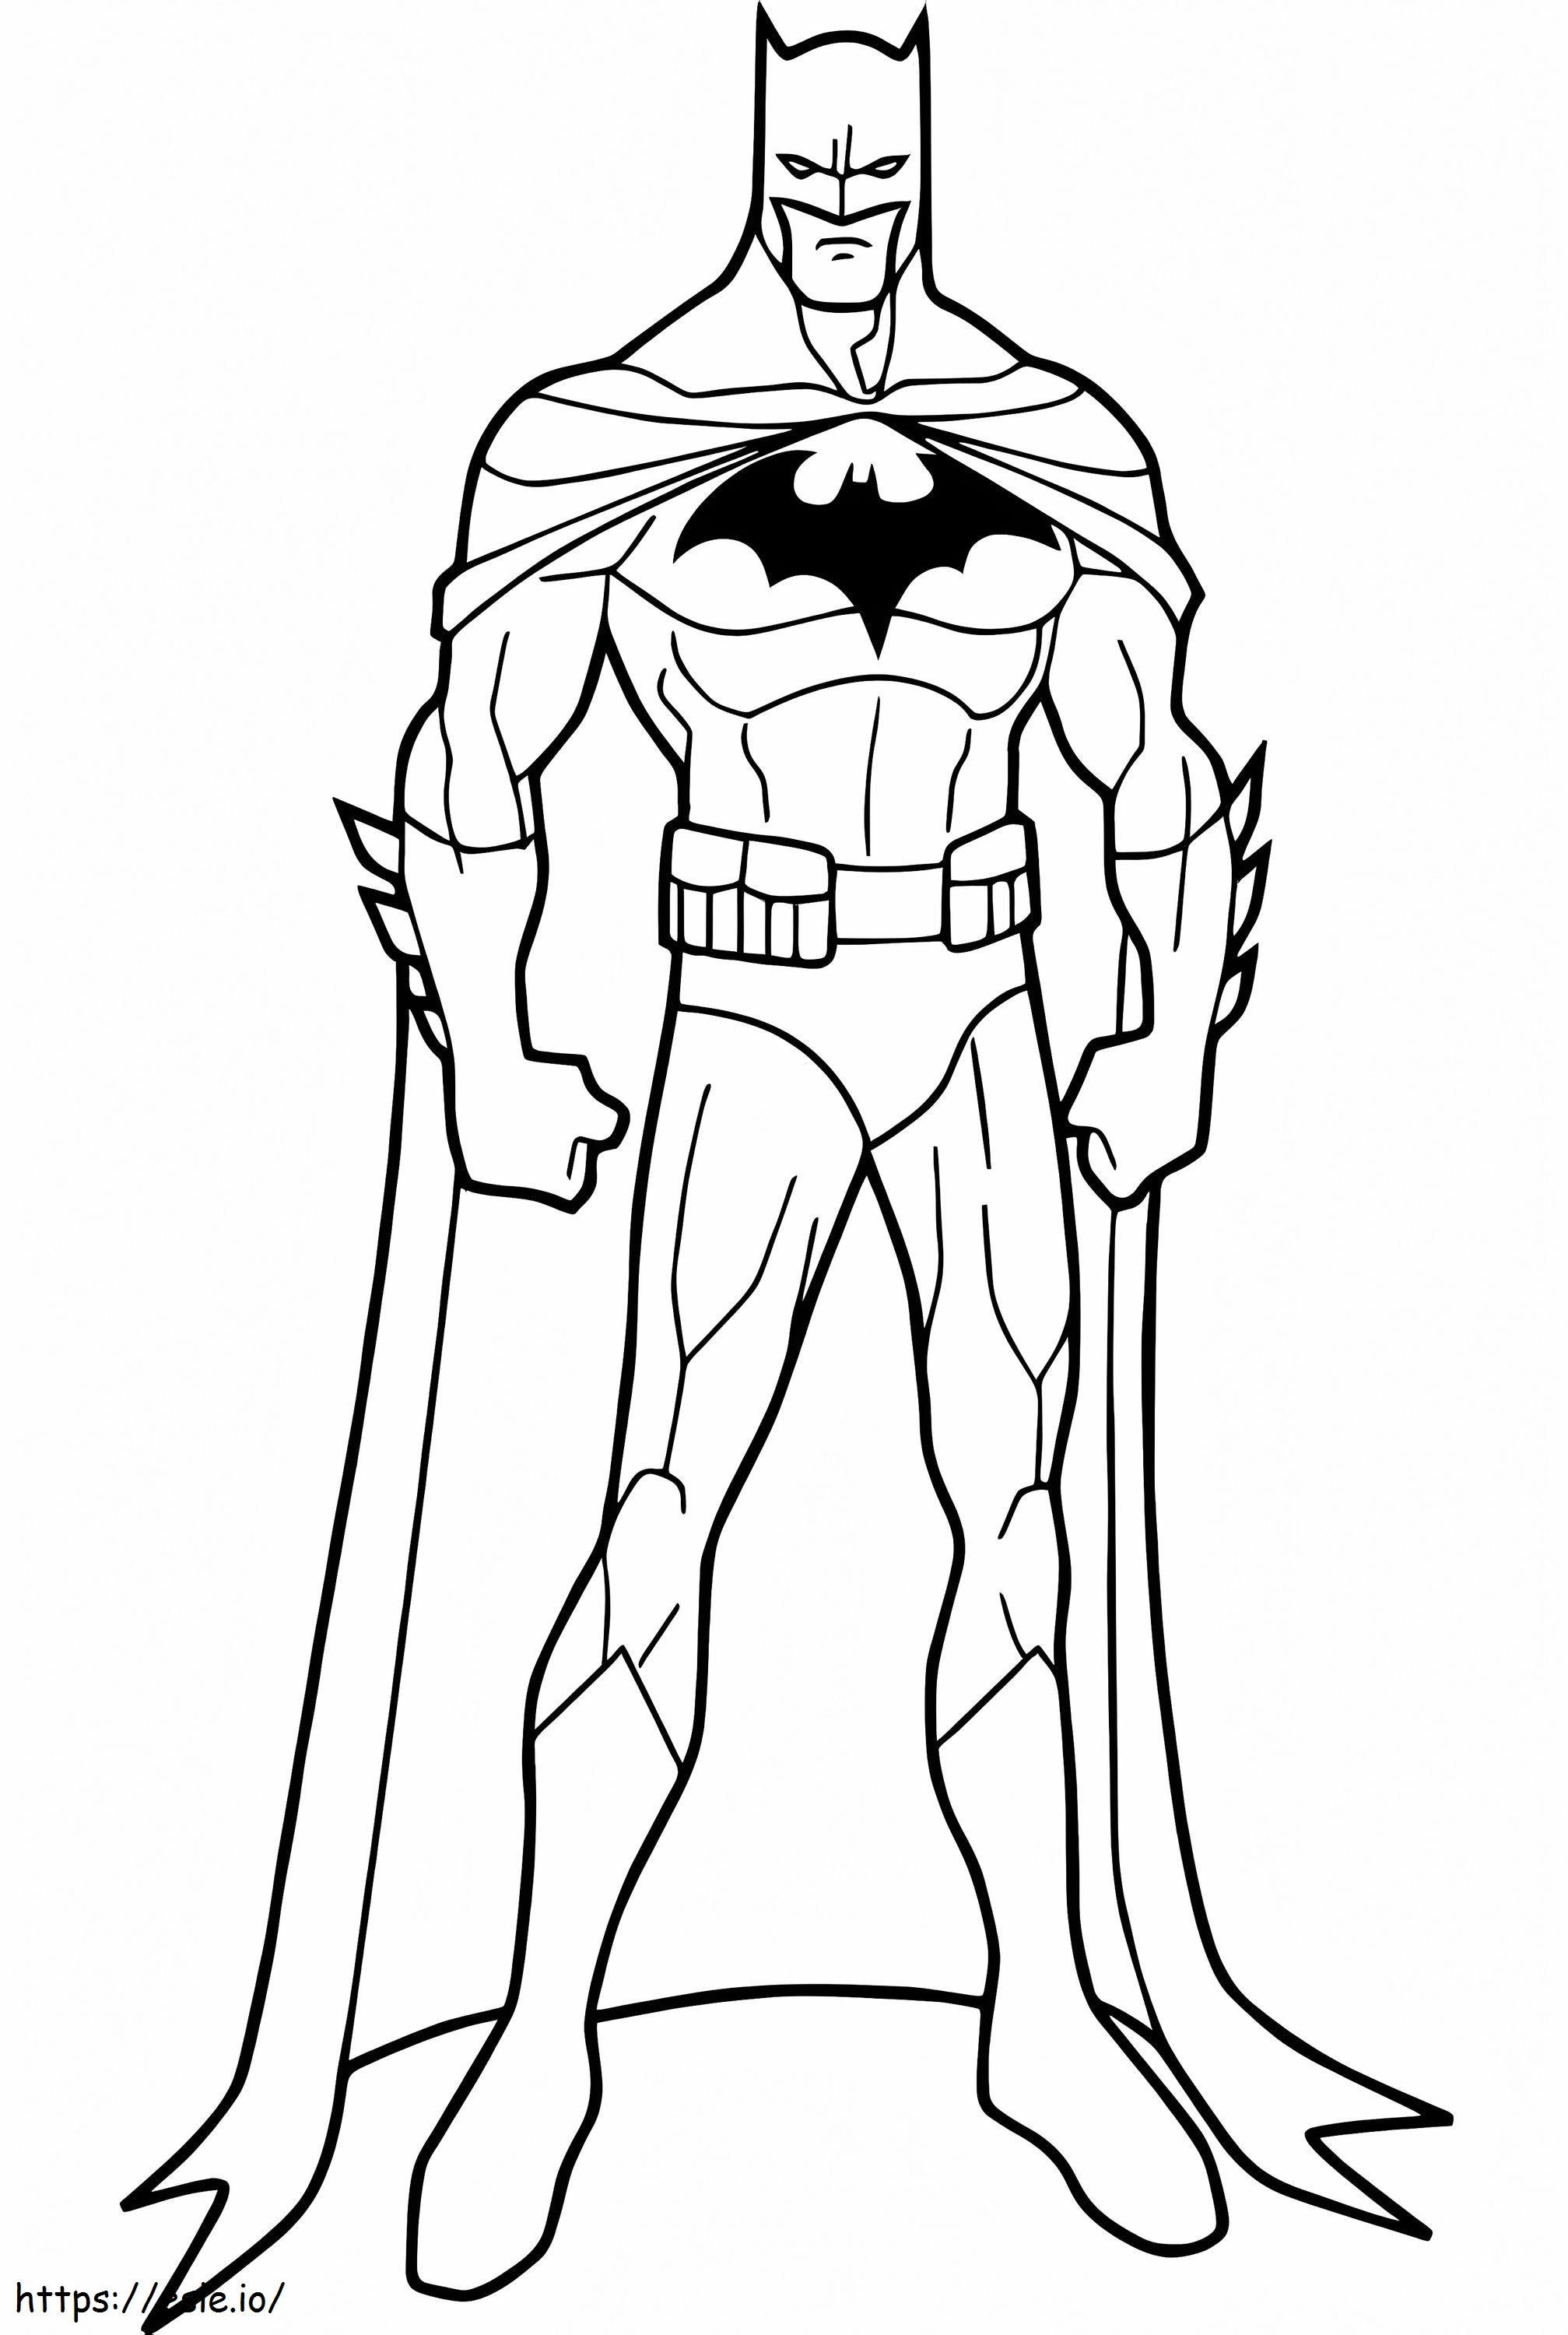 Batman-Haltung ausmalbilder